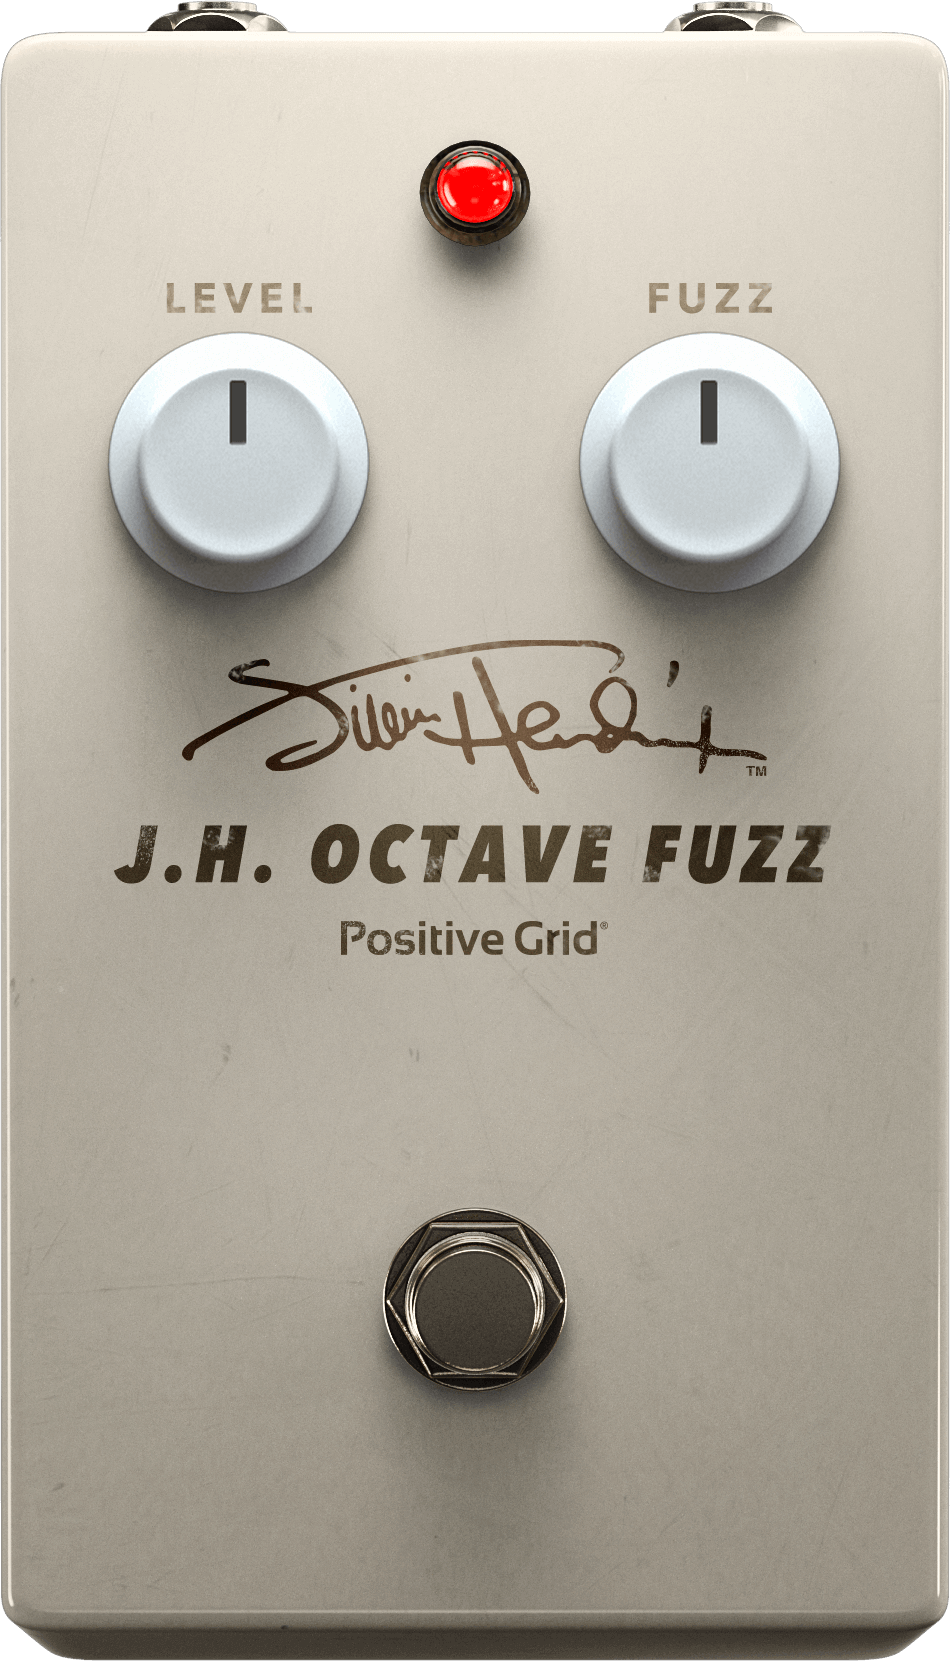 J.H. Octave Fuzz, inspired by Roger Mayer Octavia